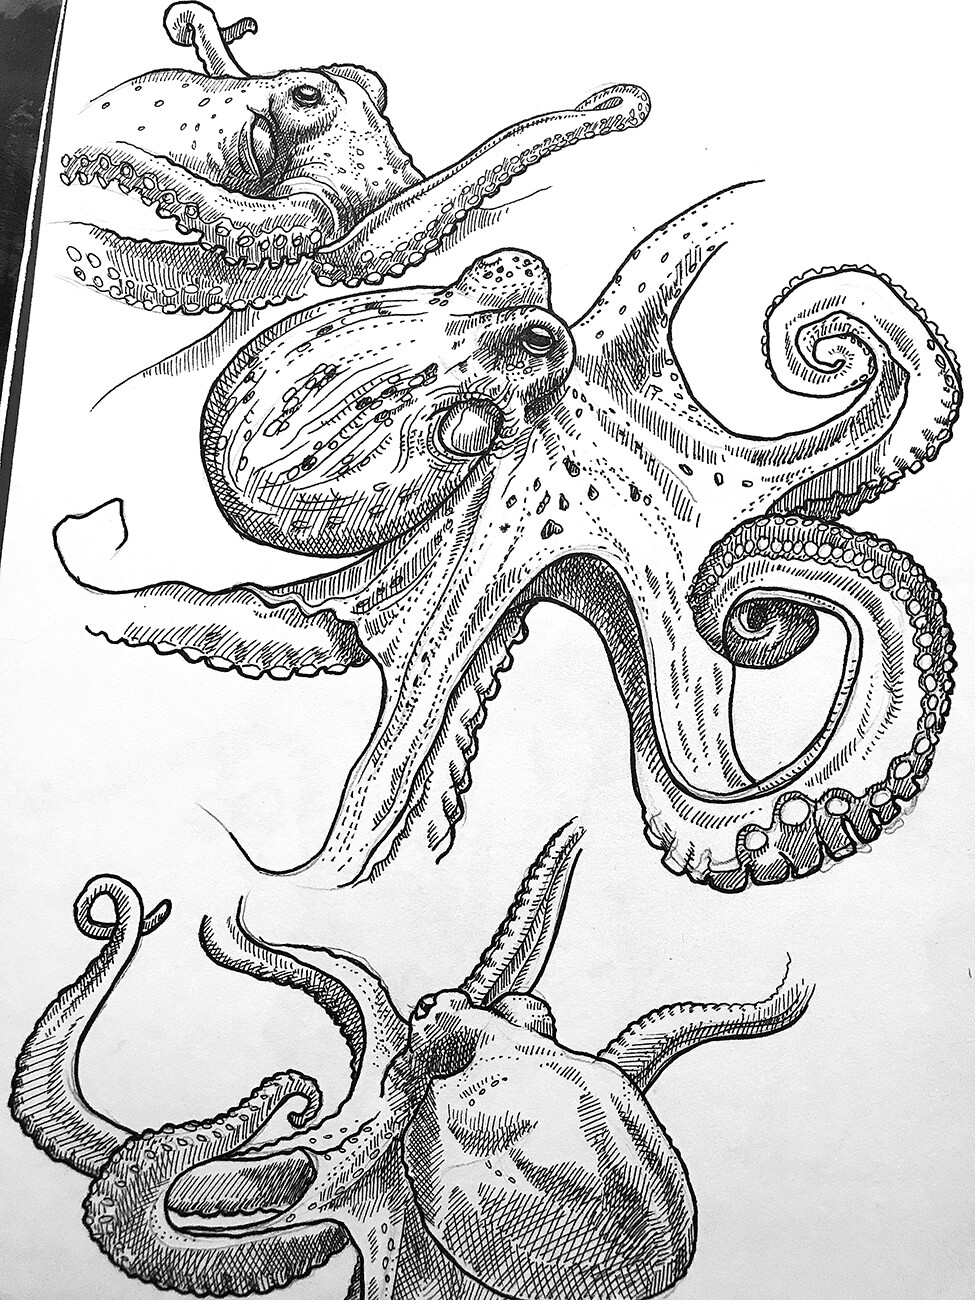 Octopus study